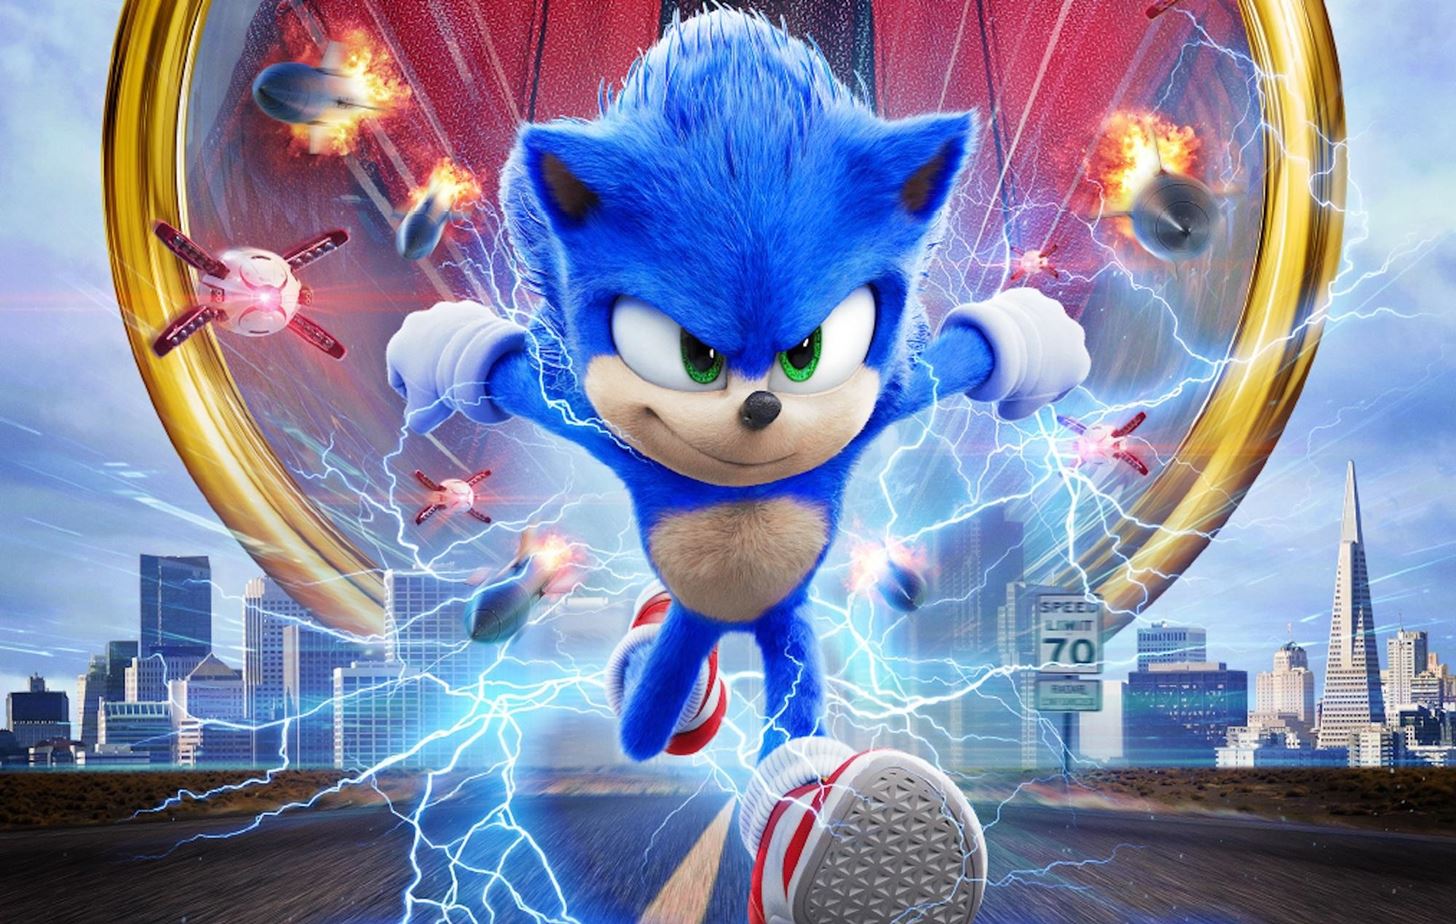 [123Movie] Sonic the Hedgehog 2020 Full Movie Online FREE « Digiwonk :: Gadget Hacks5 日前